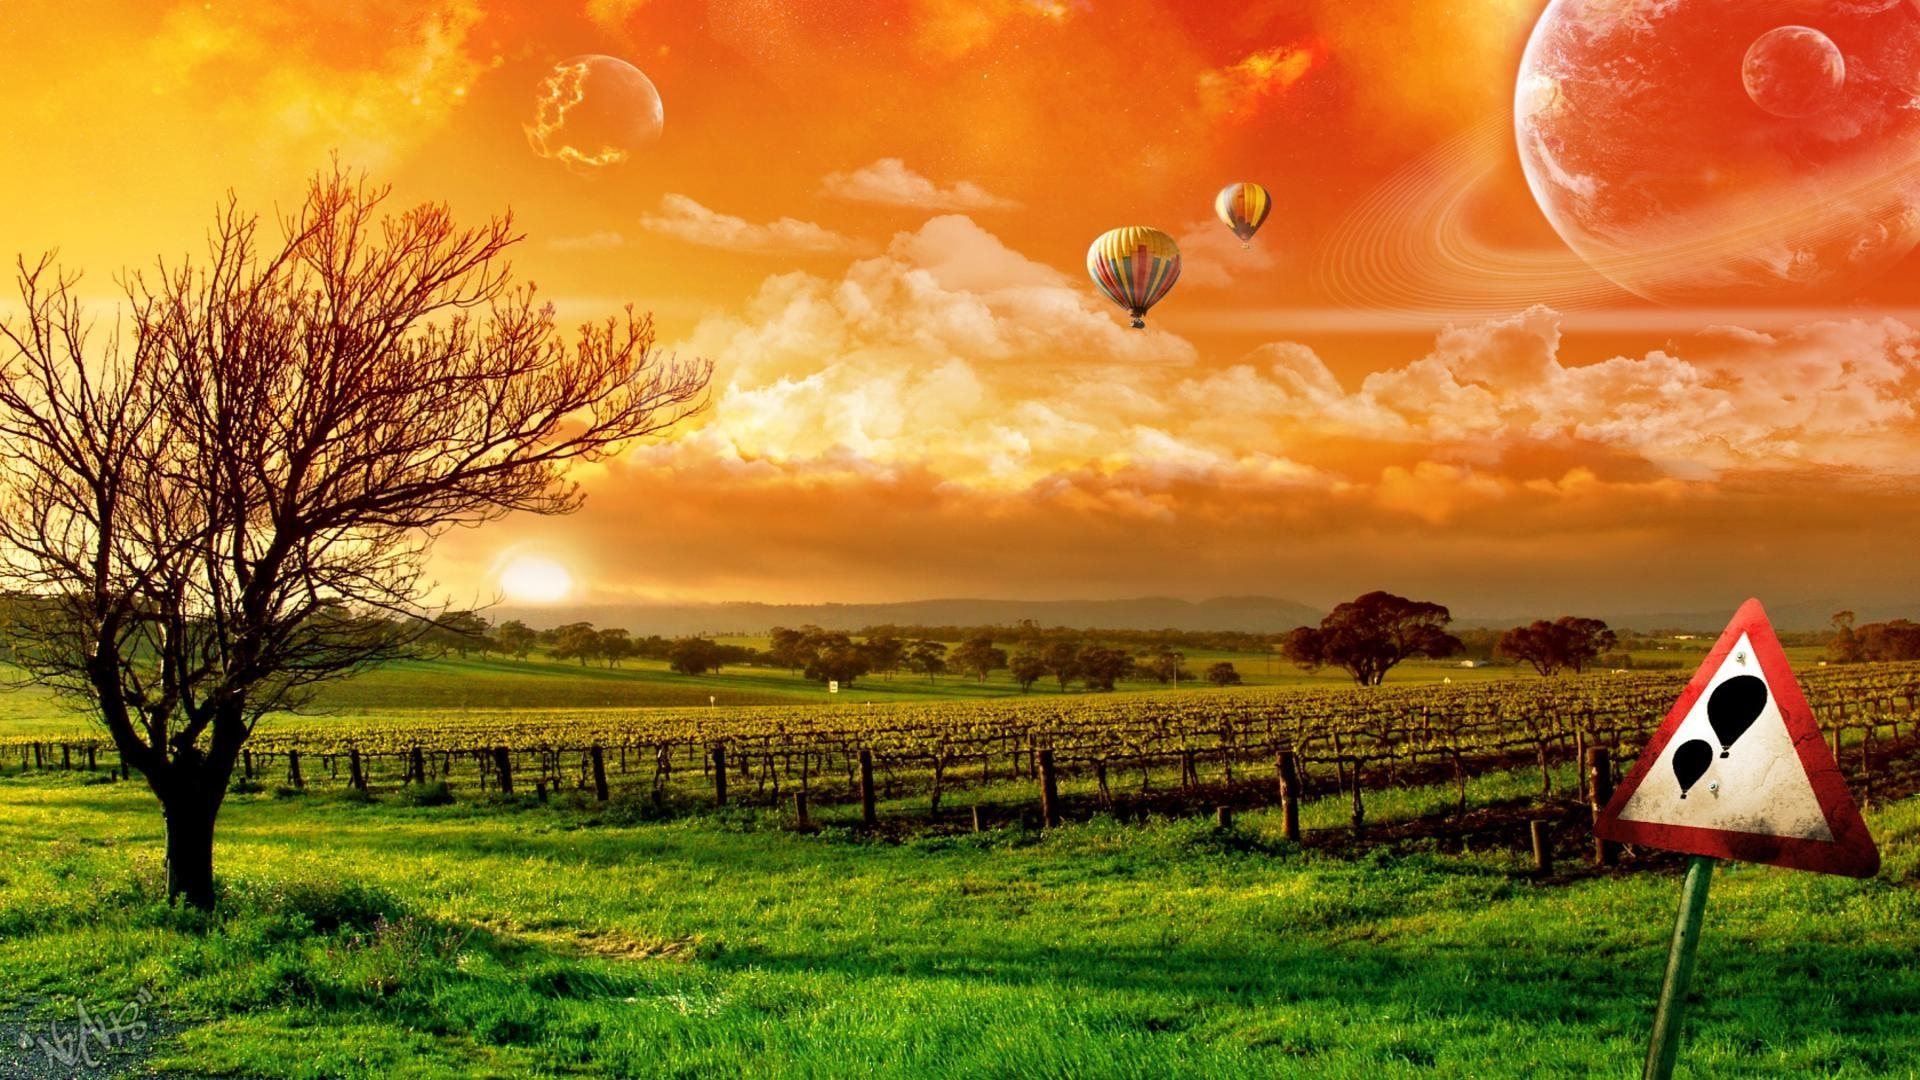 background wallpaper for photoshop,natural landscape,sky,nature,grass,grassland